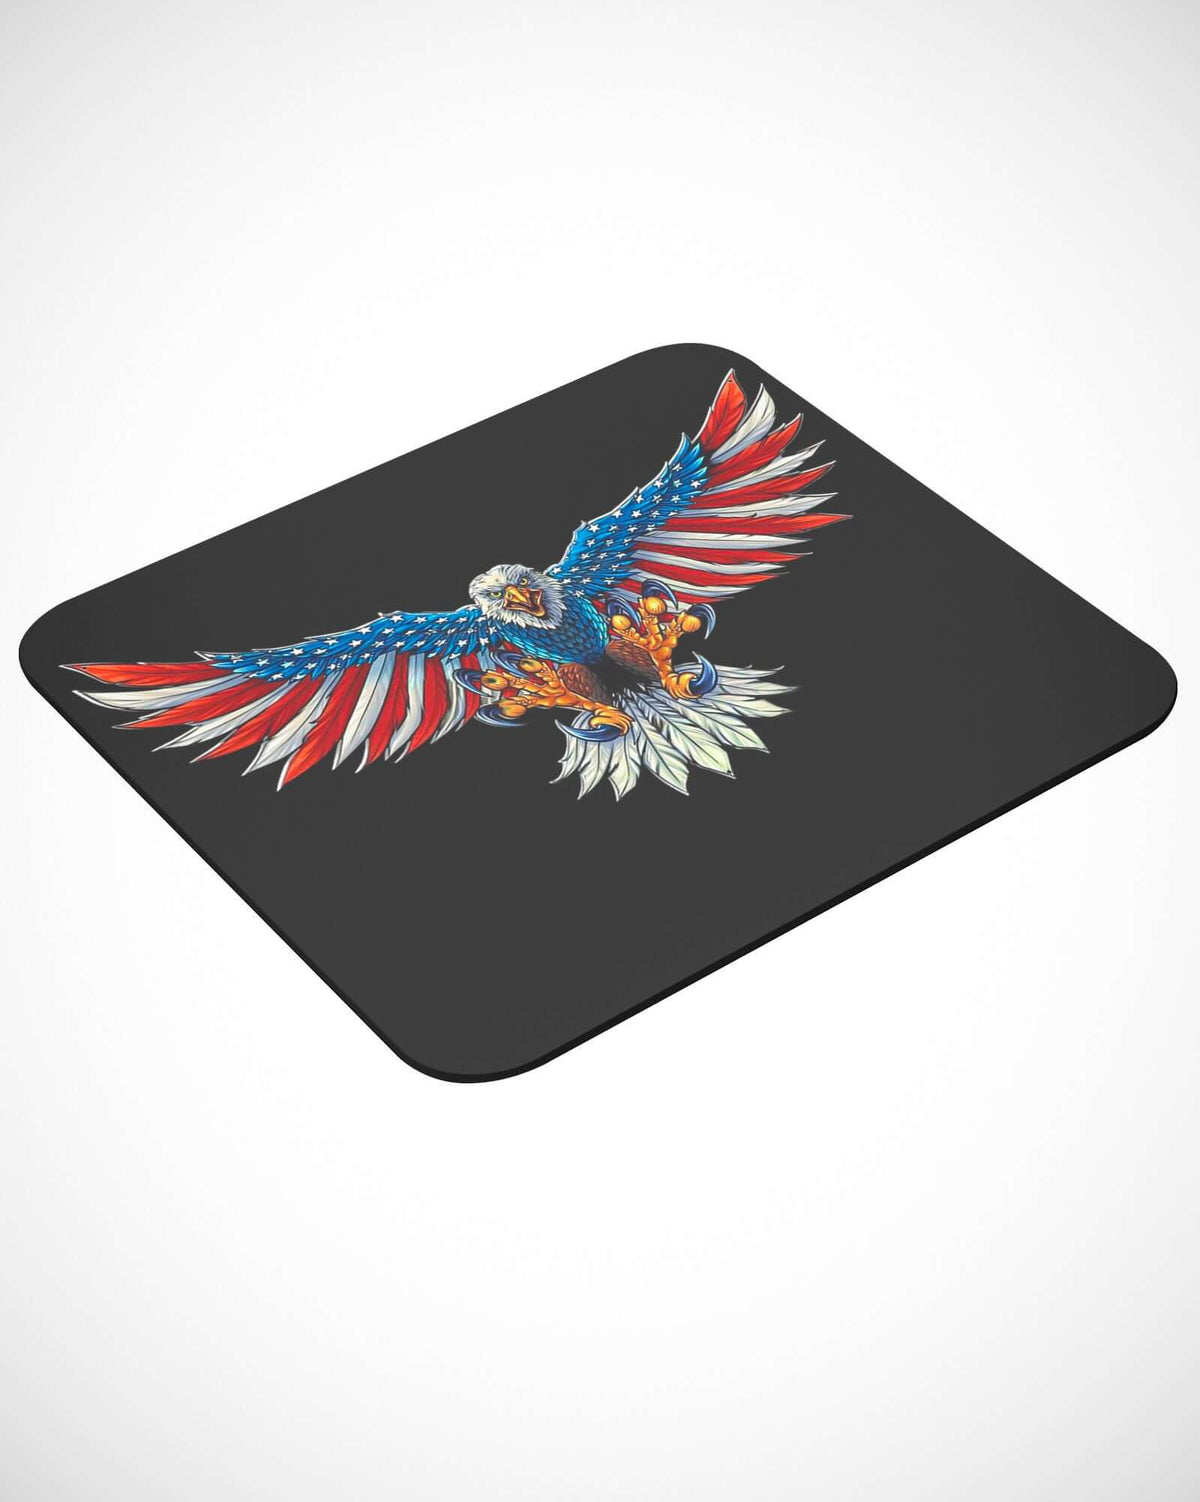 Eagle Flag USA Patriotic Graphic Mouse pad - ApparelinClick